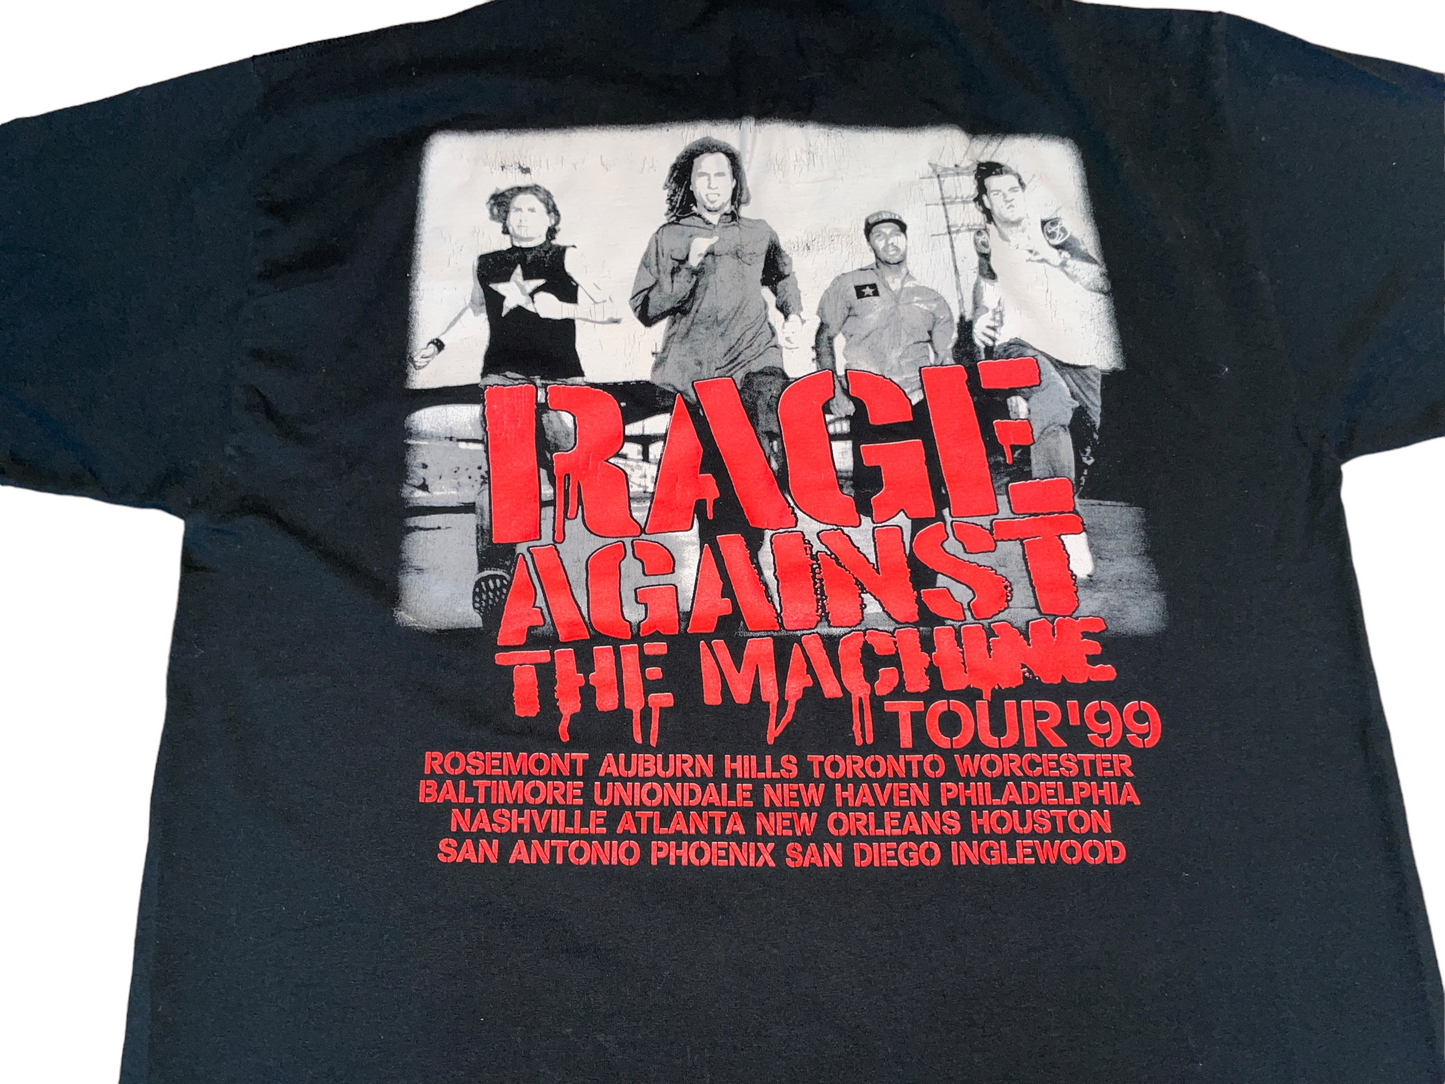 Vintage 1999 Rage Against The Machine T-Shirt